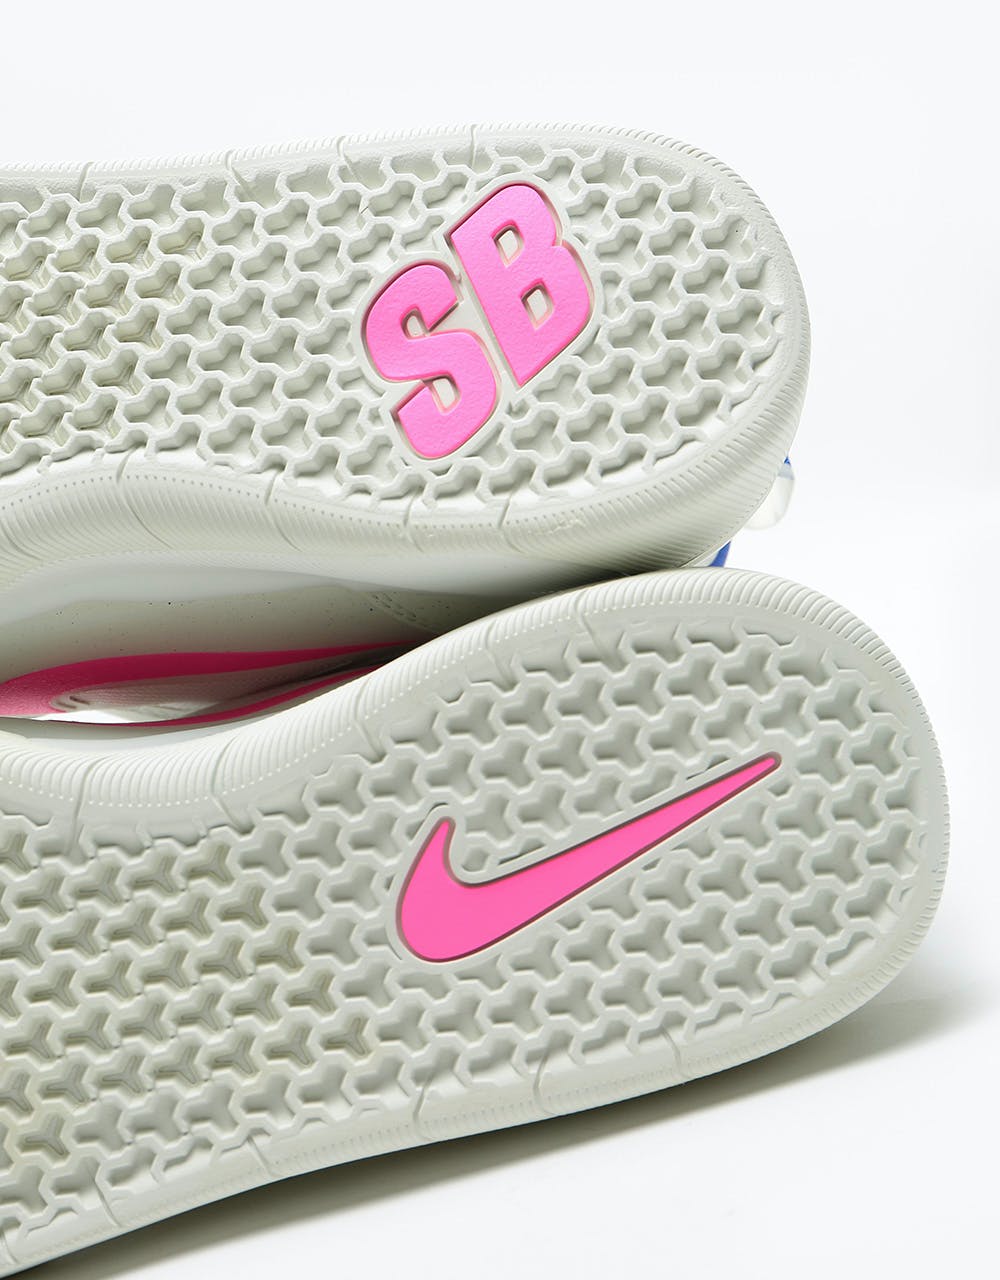 Nike SB Nyjah Free 2.0 T Skate Shoes - Summit White/Racer Blue-Pink Bl